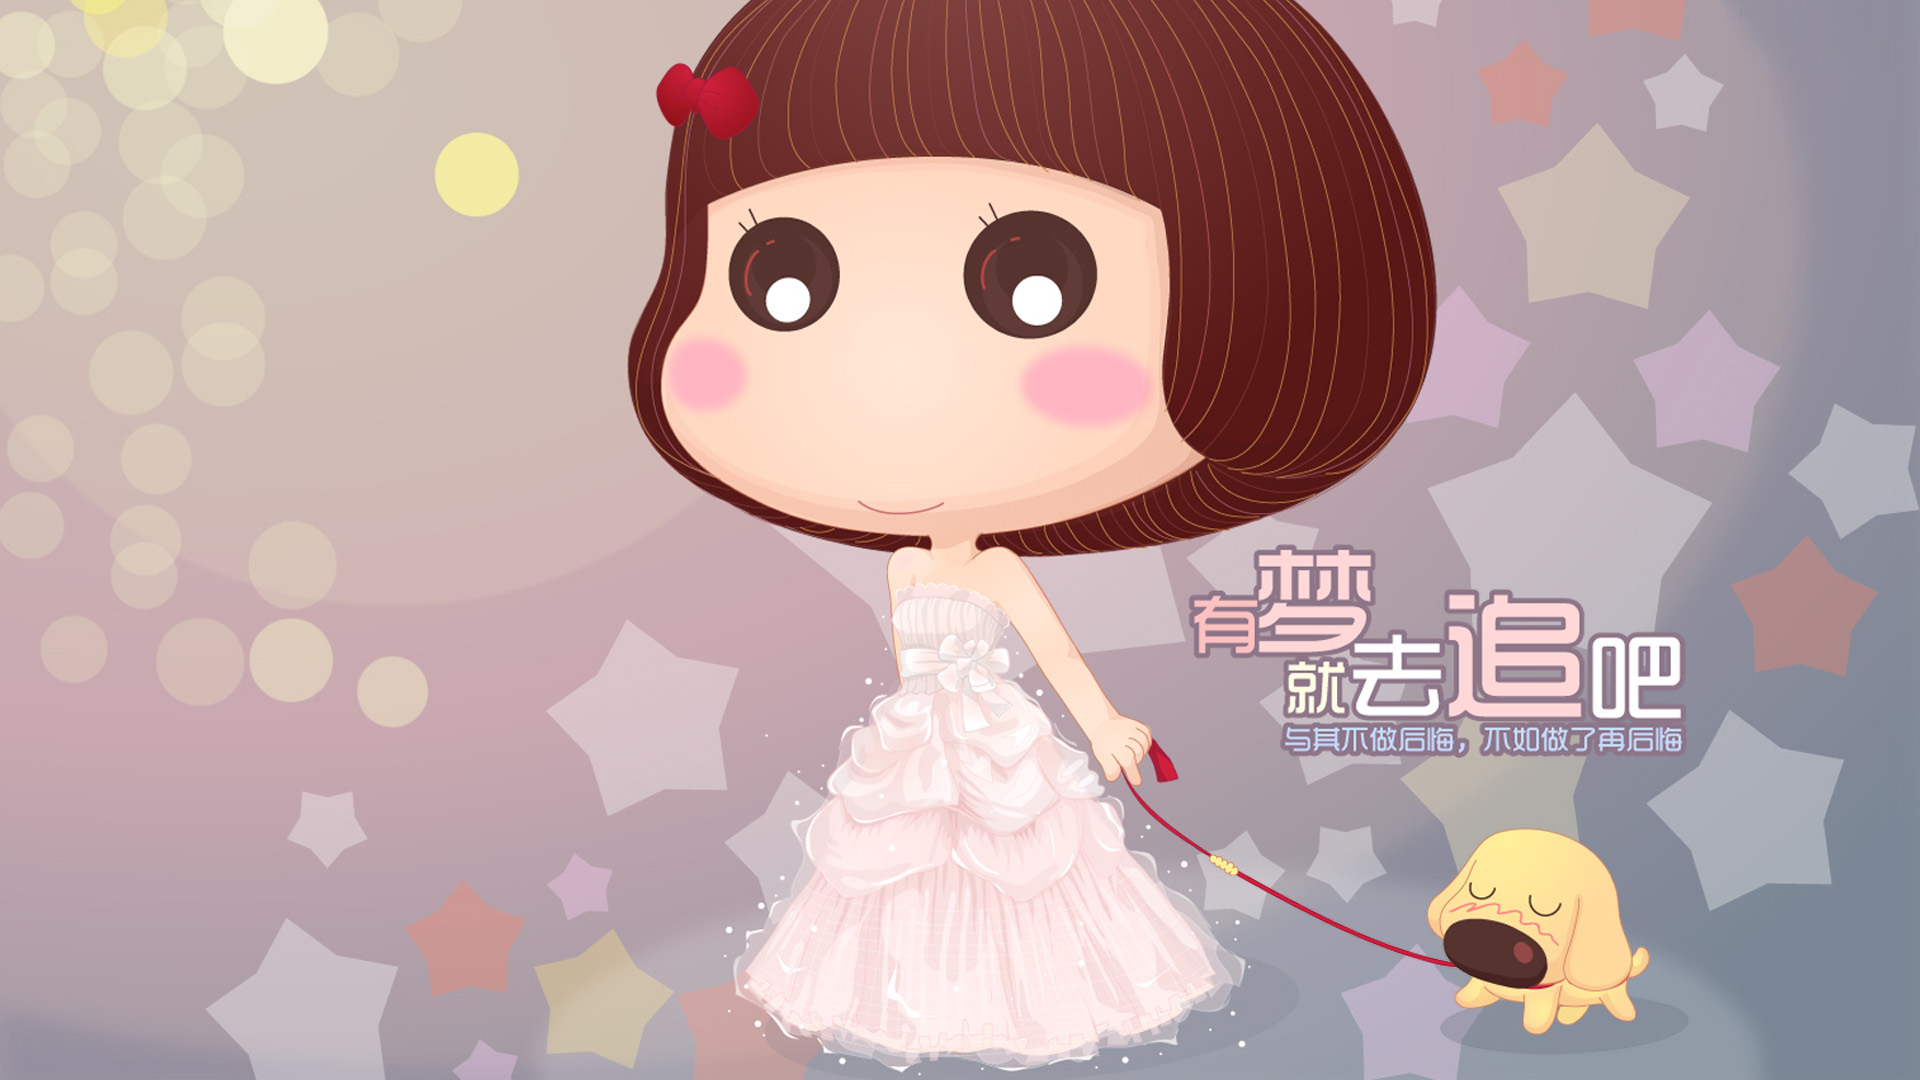 QQ fashion starry sky princess wallpaper